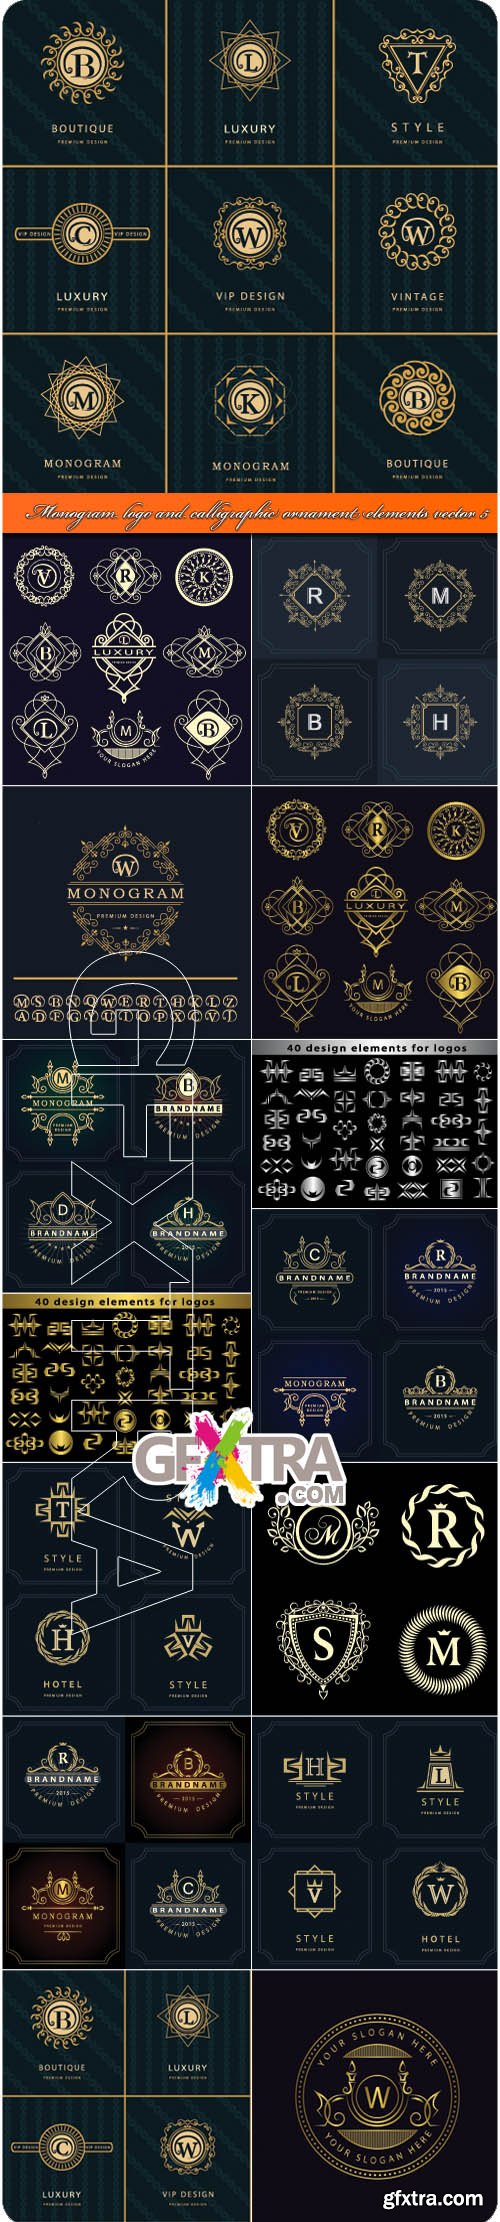 Monogram logo and calligraphic ornament elements vector 5